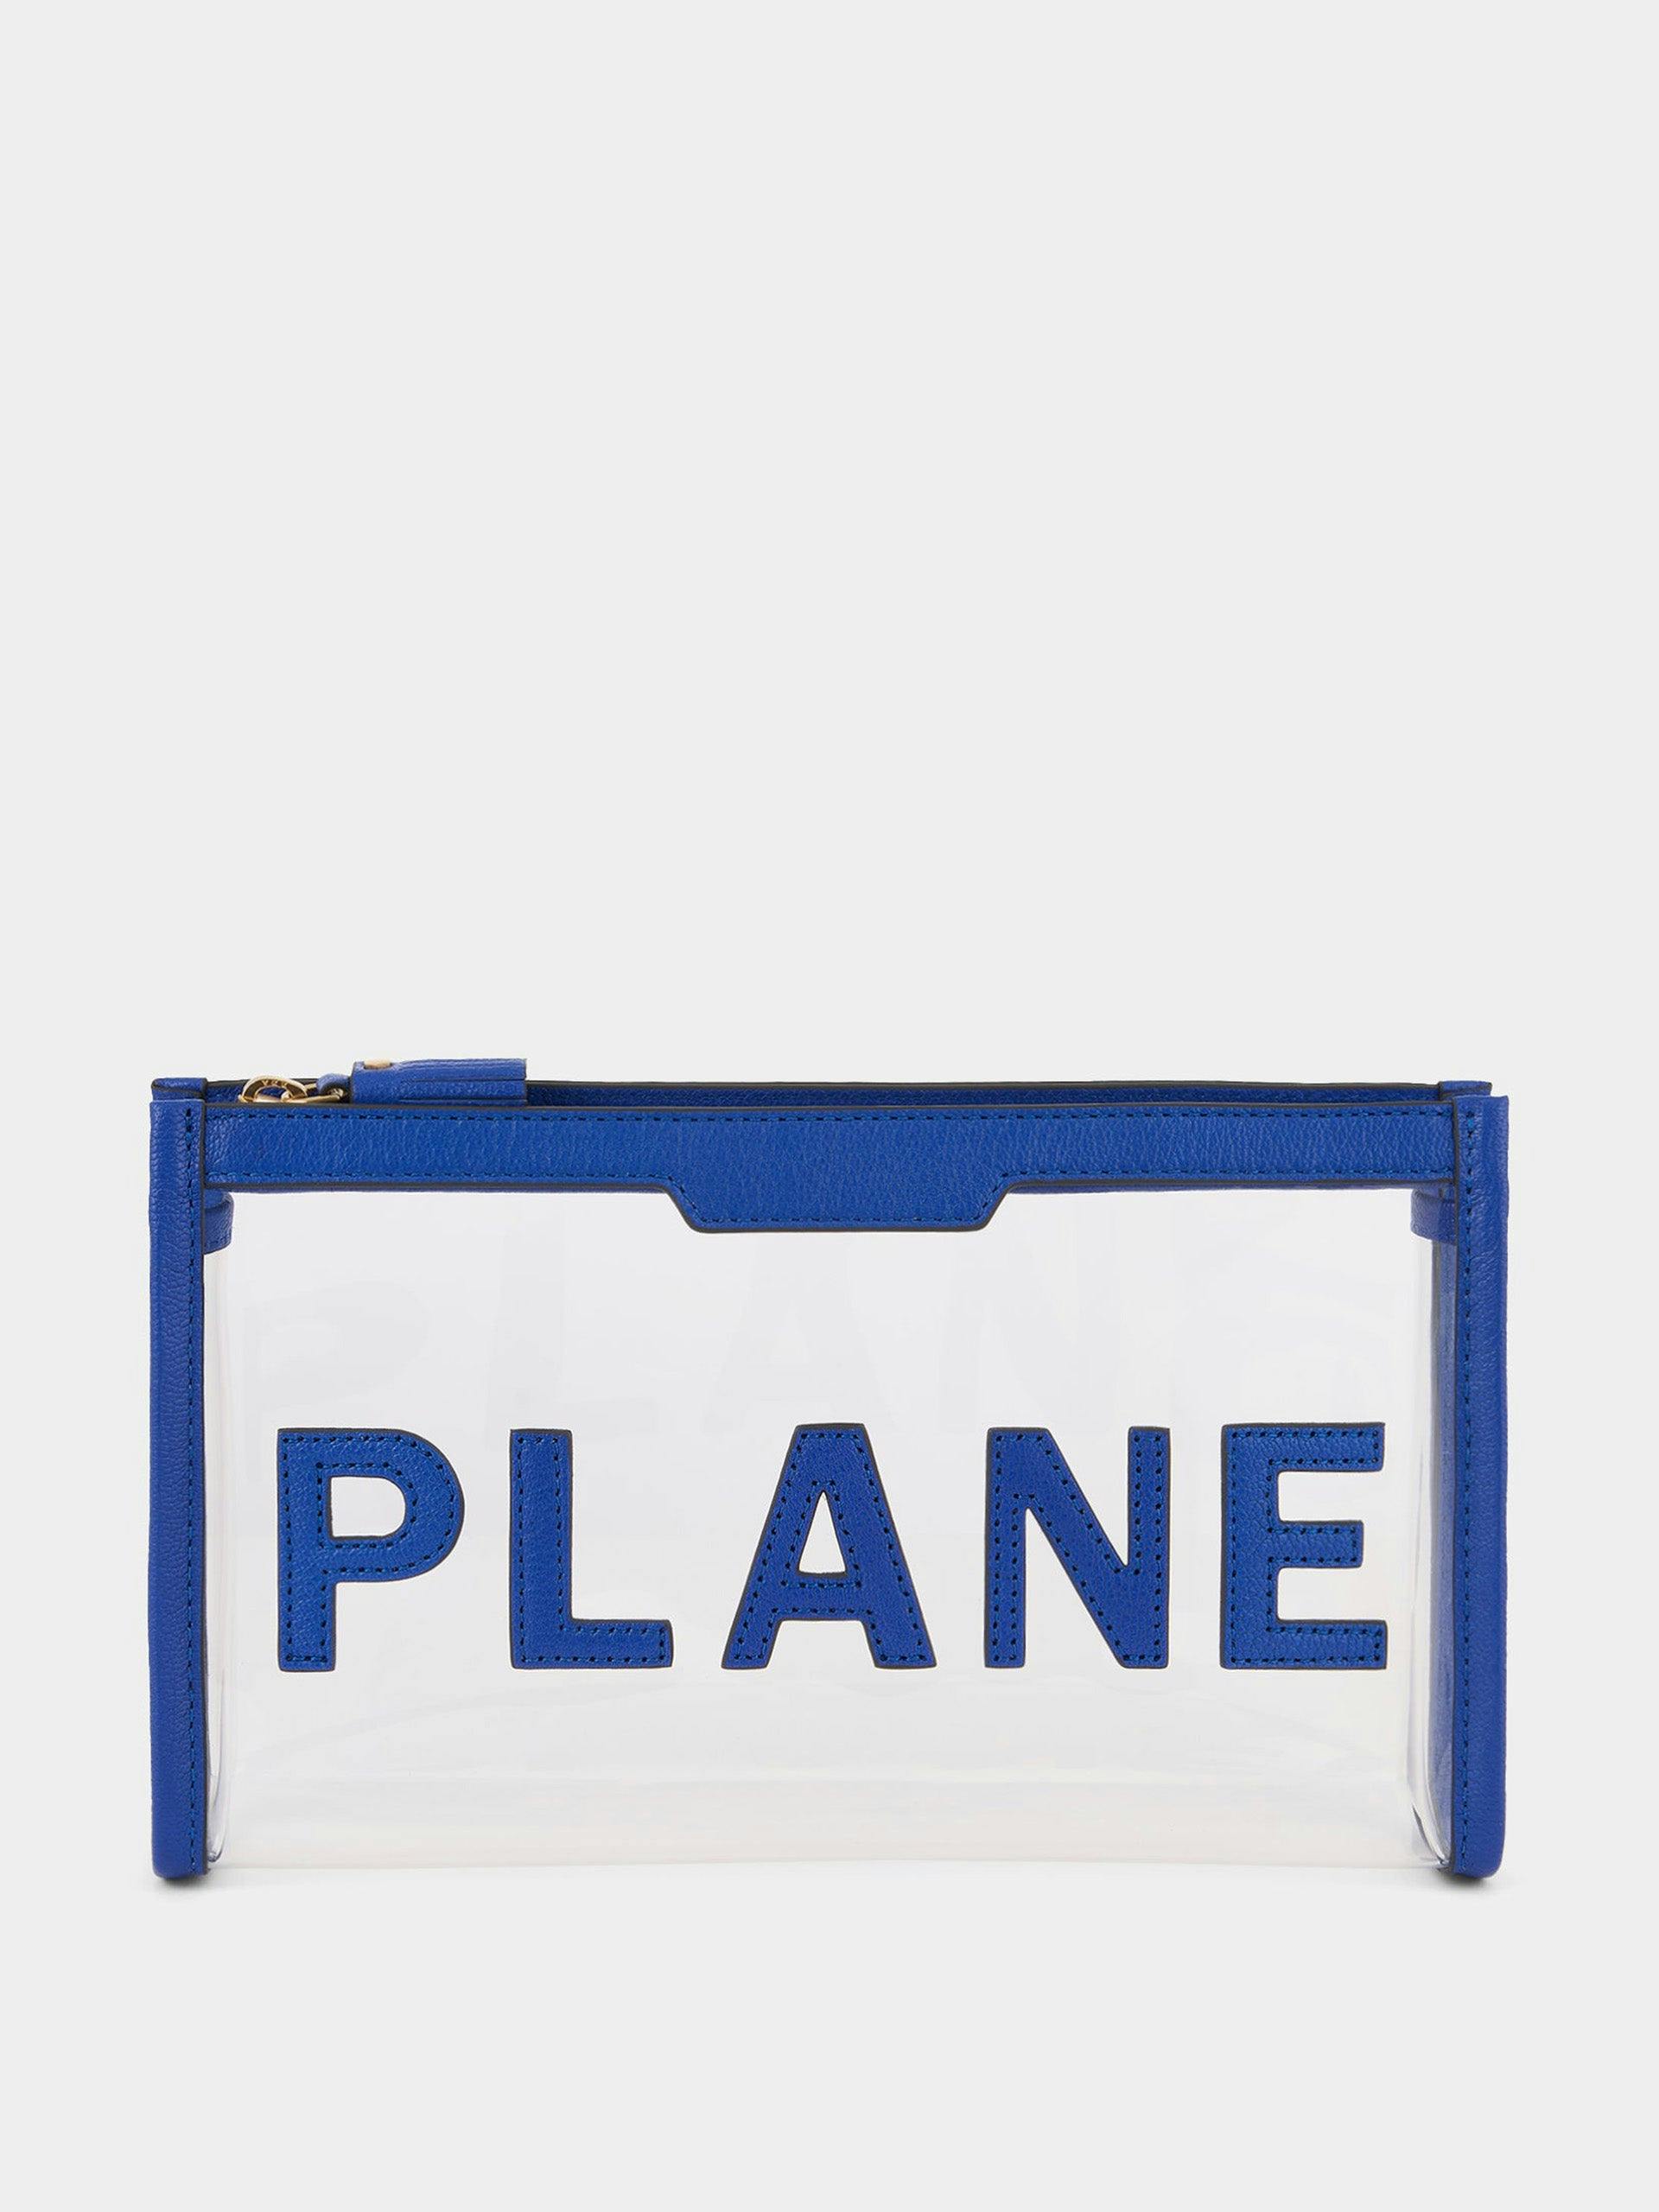 Plane pouch